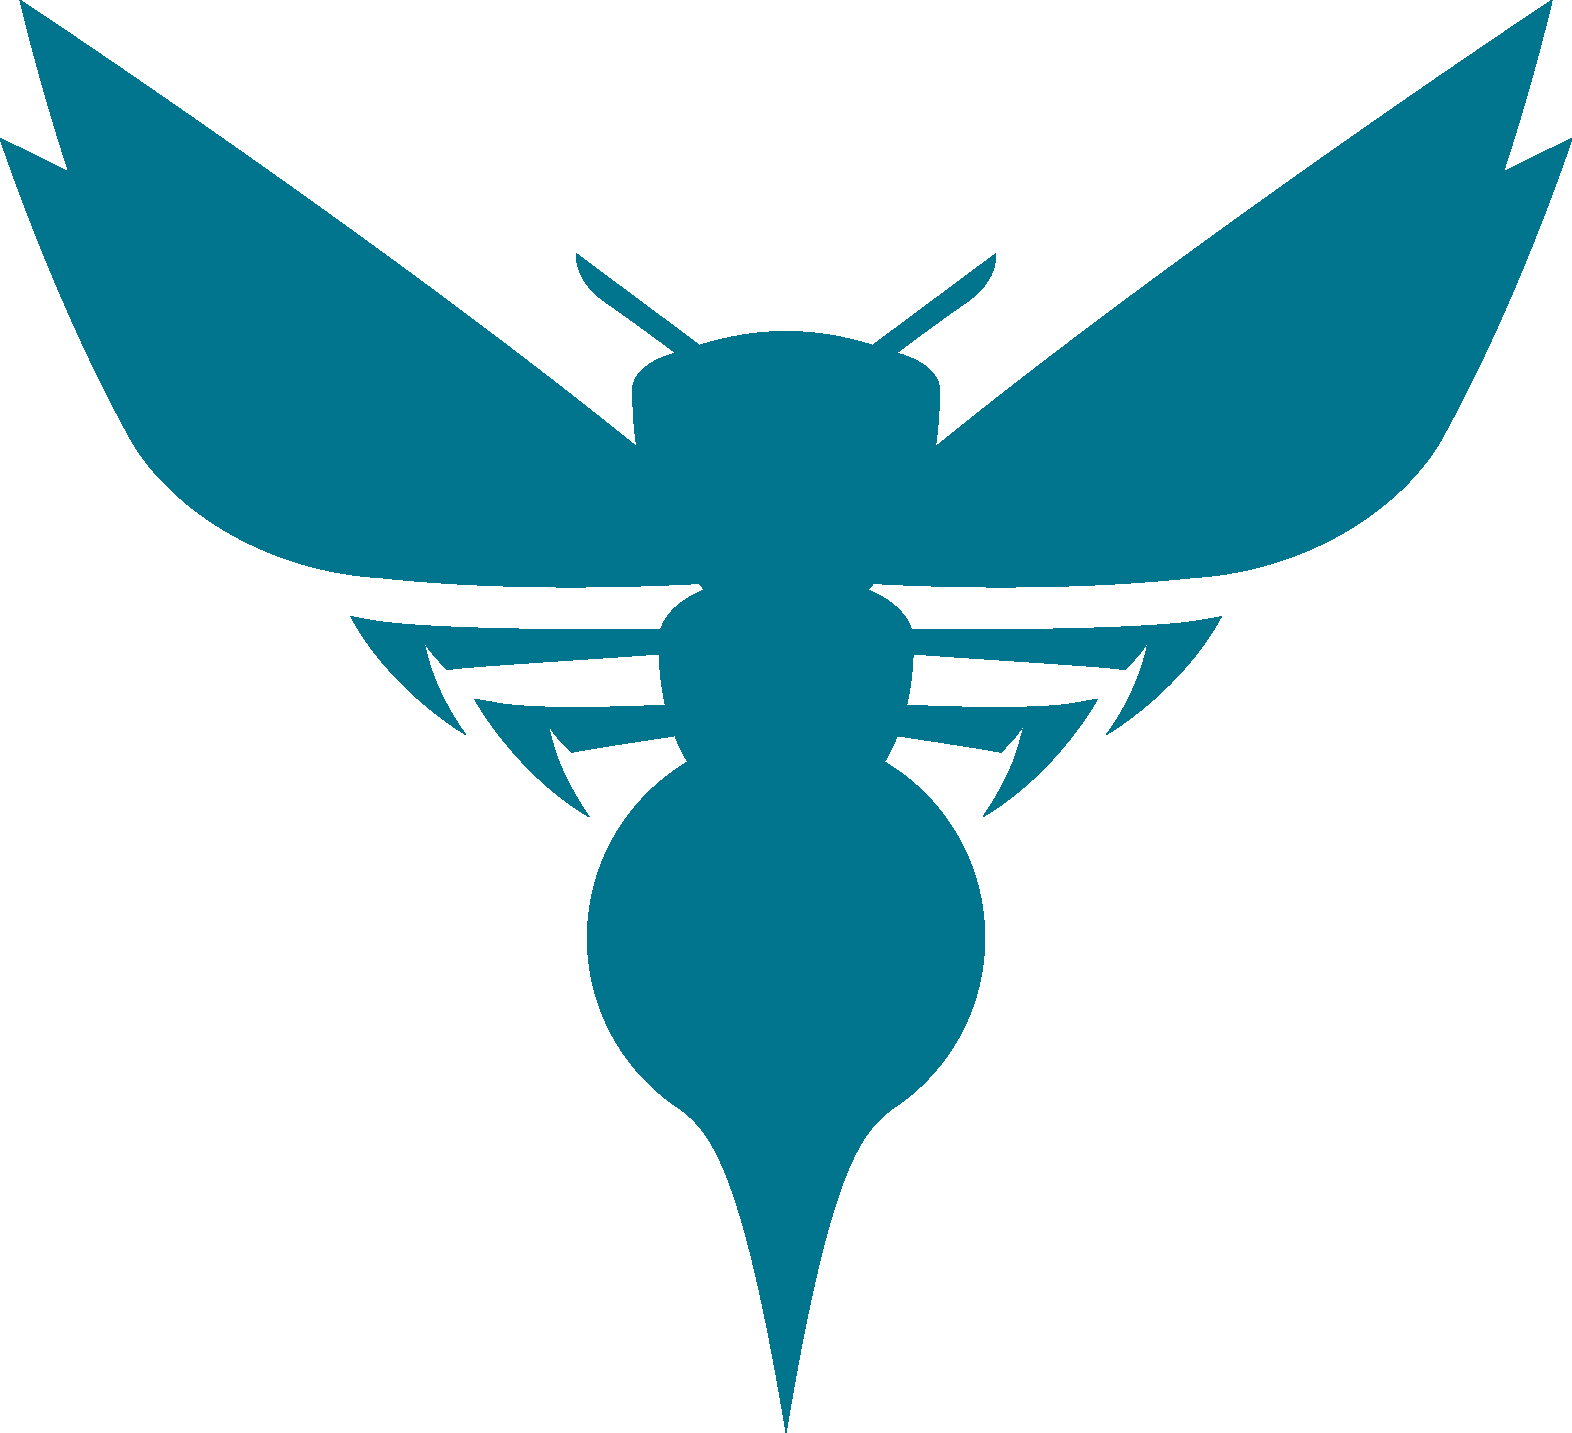 Charlotte Hornets Logo (NBA) png